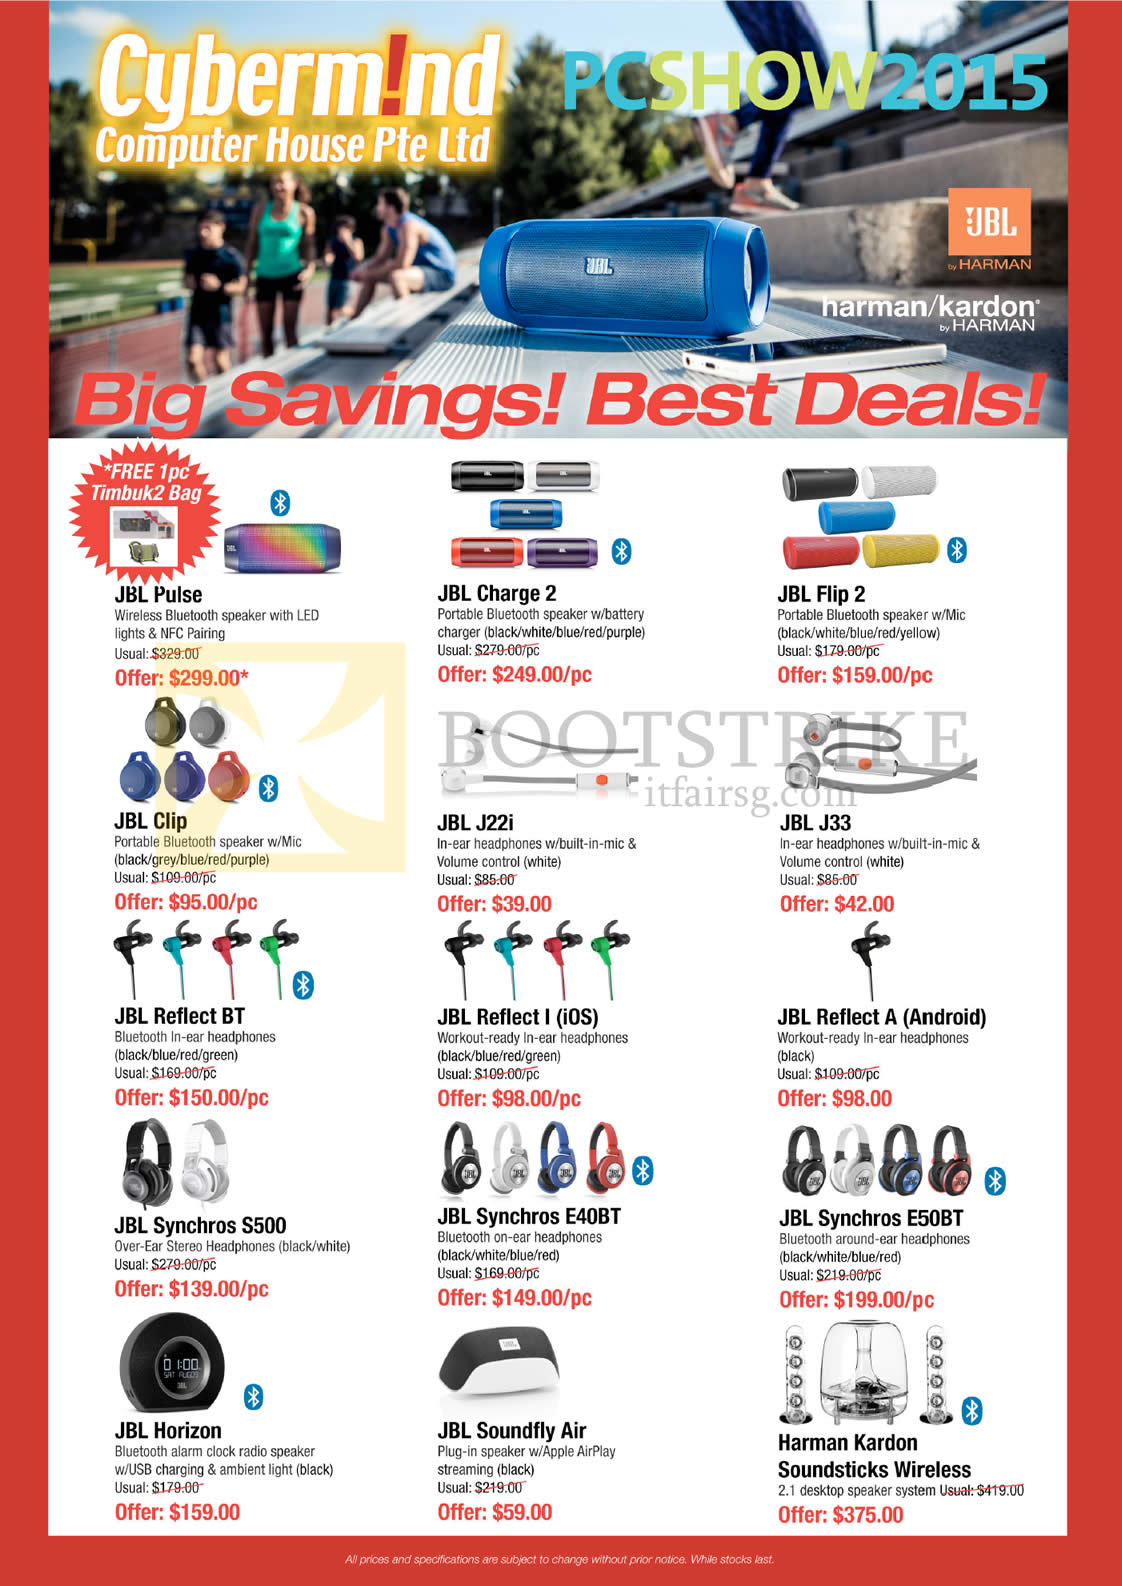 PC SHOW 2015 price list image brochure of Cybermind JBL Speakers Earphones Pulse, Charge 2, Flip 2, Clip, J22i, J33, Reflect Bt, Synchros, Horizon, Soundfly Air, Harman Kardon